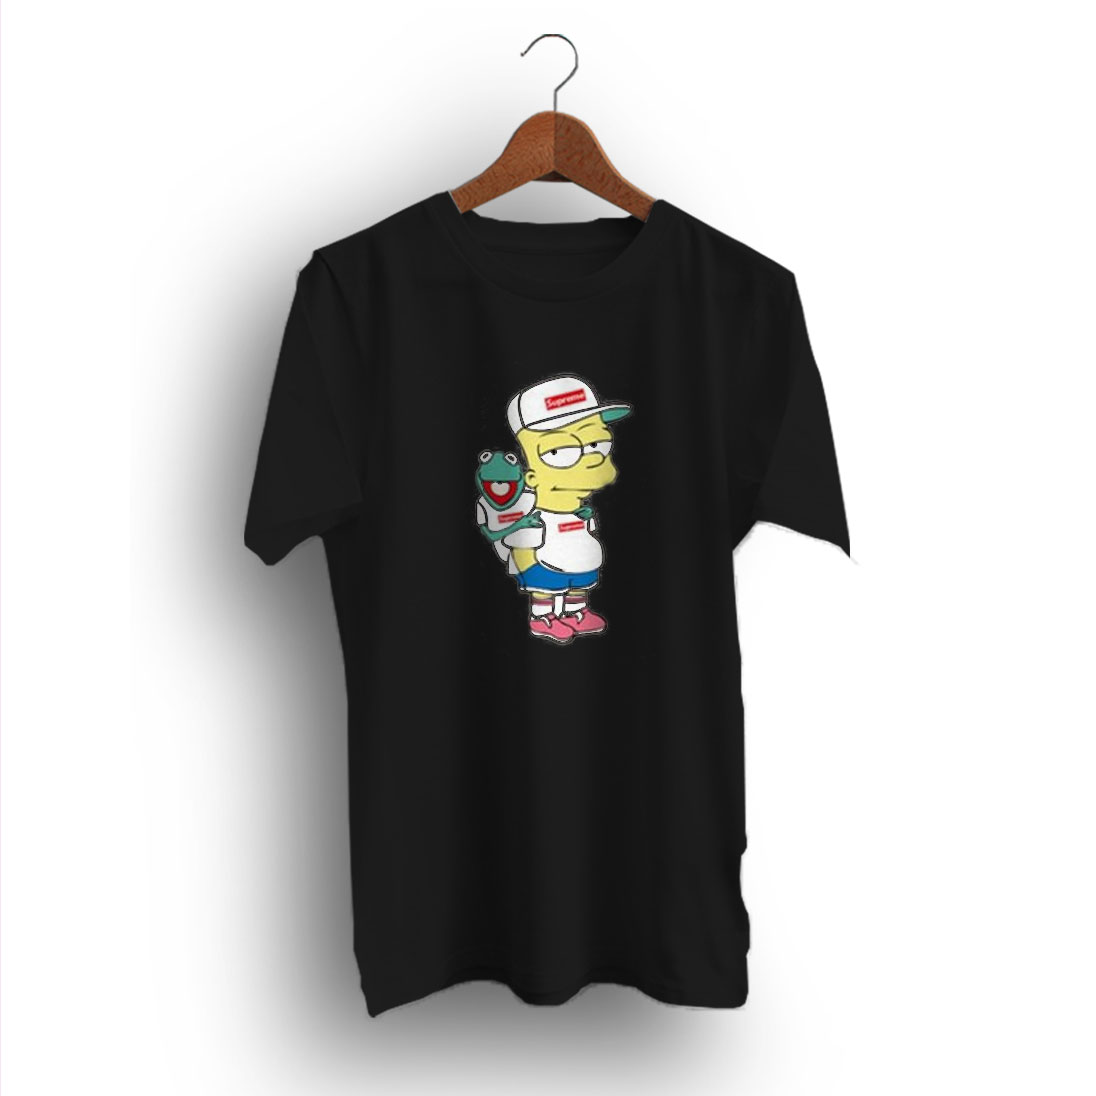 It East Bart Simpson Supreme T-Shirt Design Bigvero